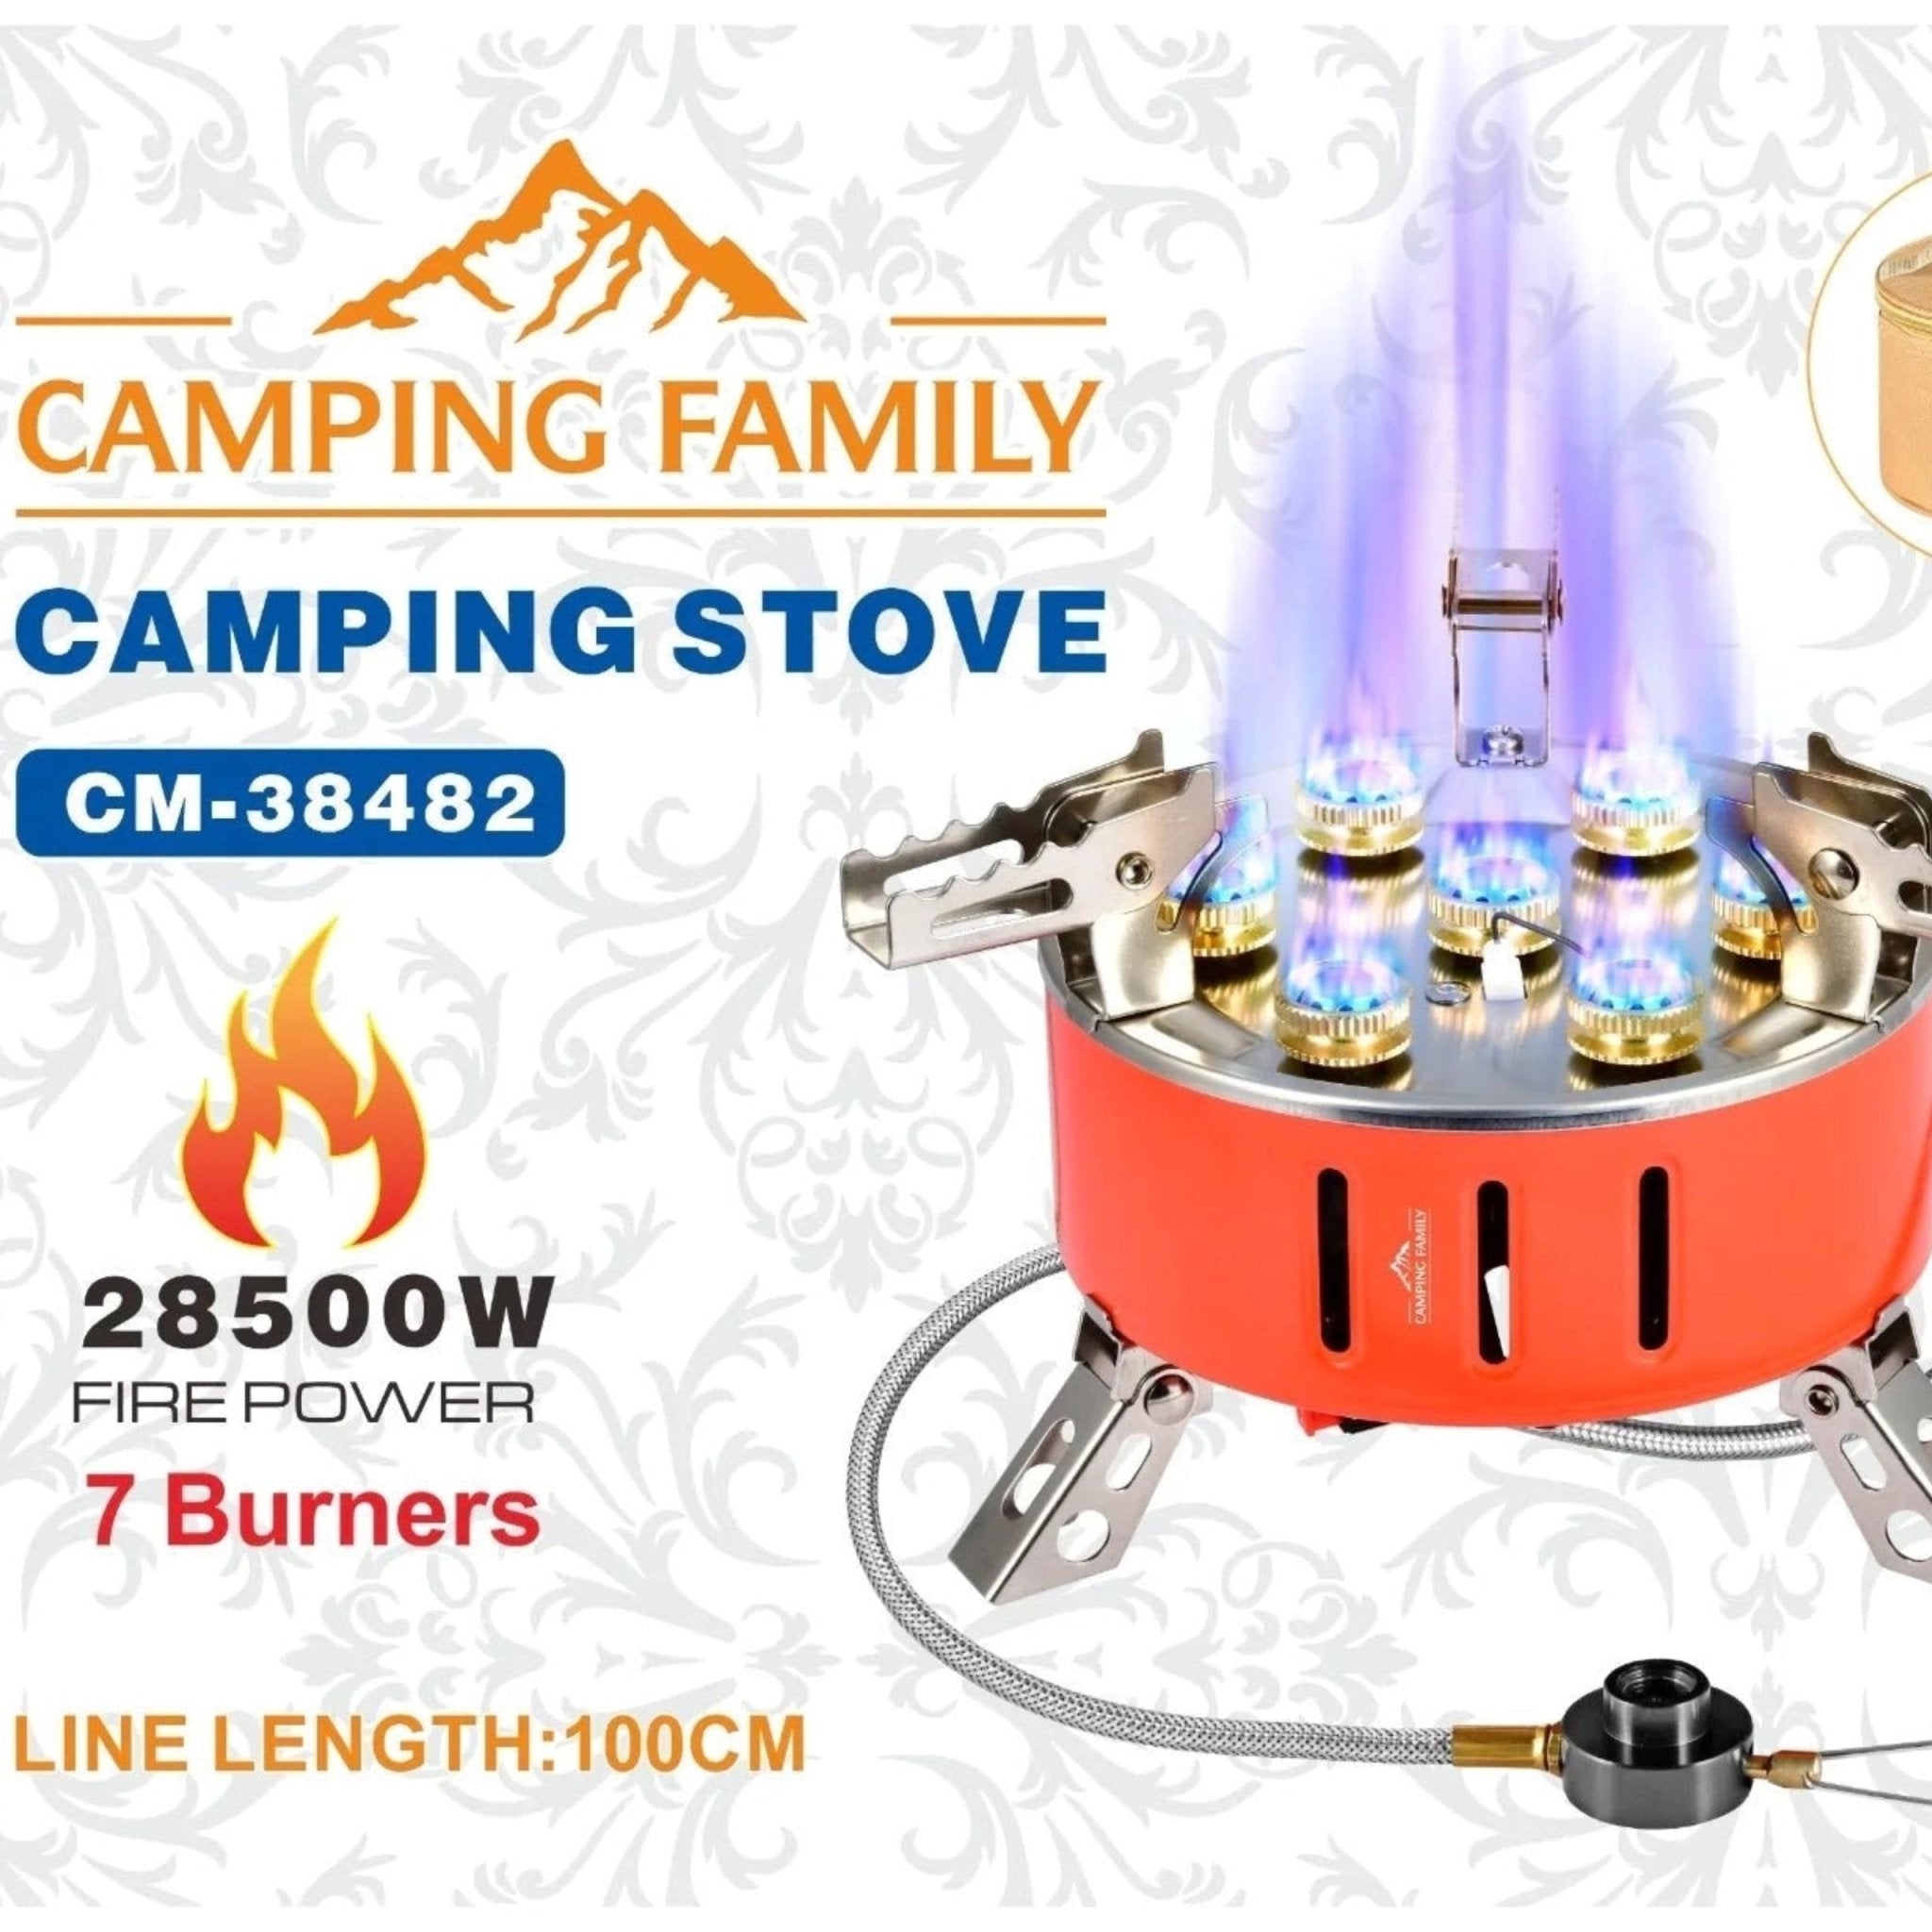 Camping Family Camping Stove 7 Burners 28500W CM-38482 - Orange